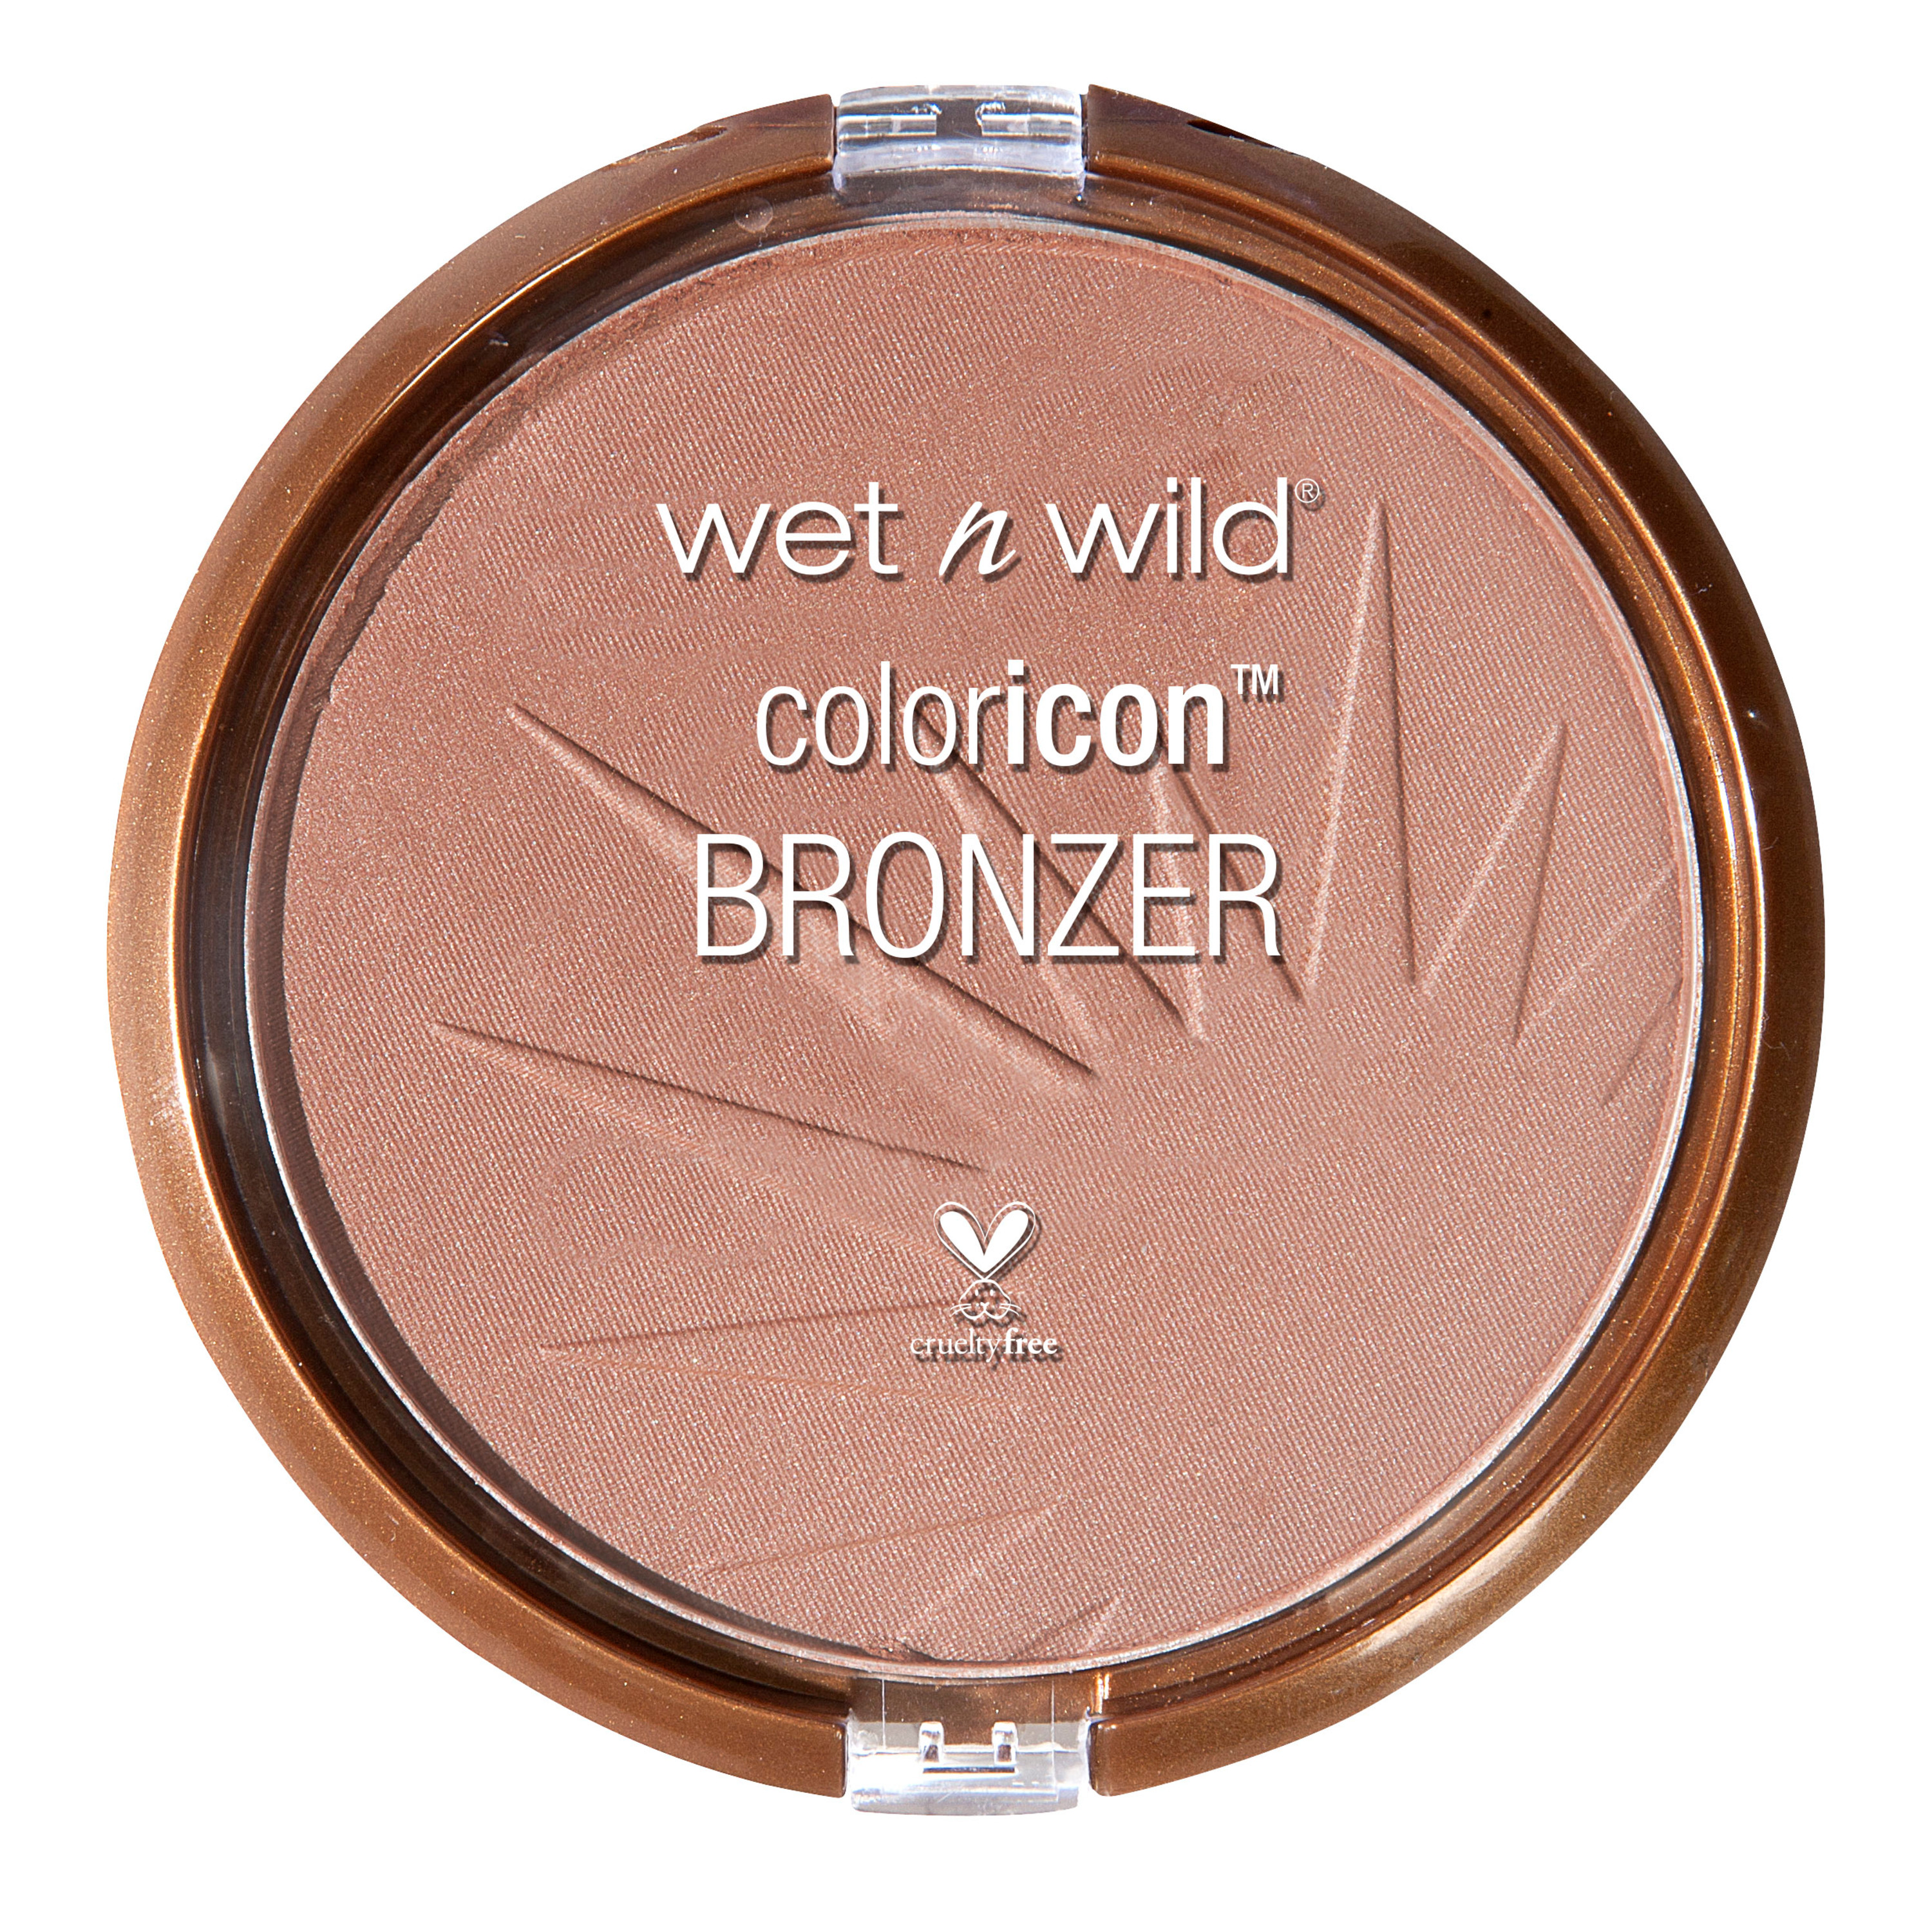 wet n wild Color Icon Bronzer, Bikini Contest - image 1 of 2